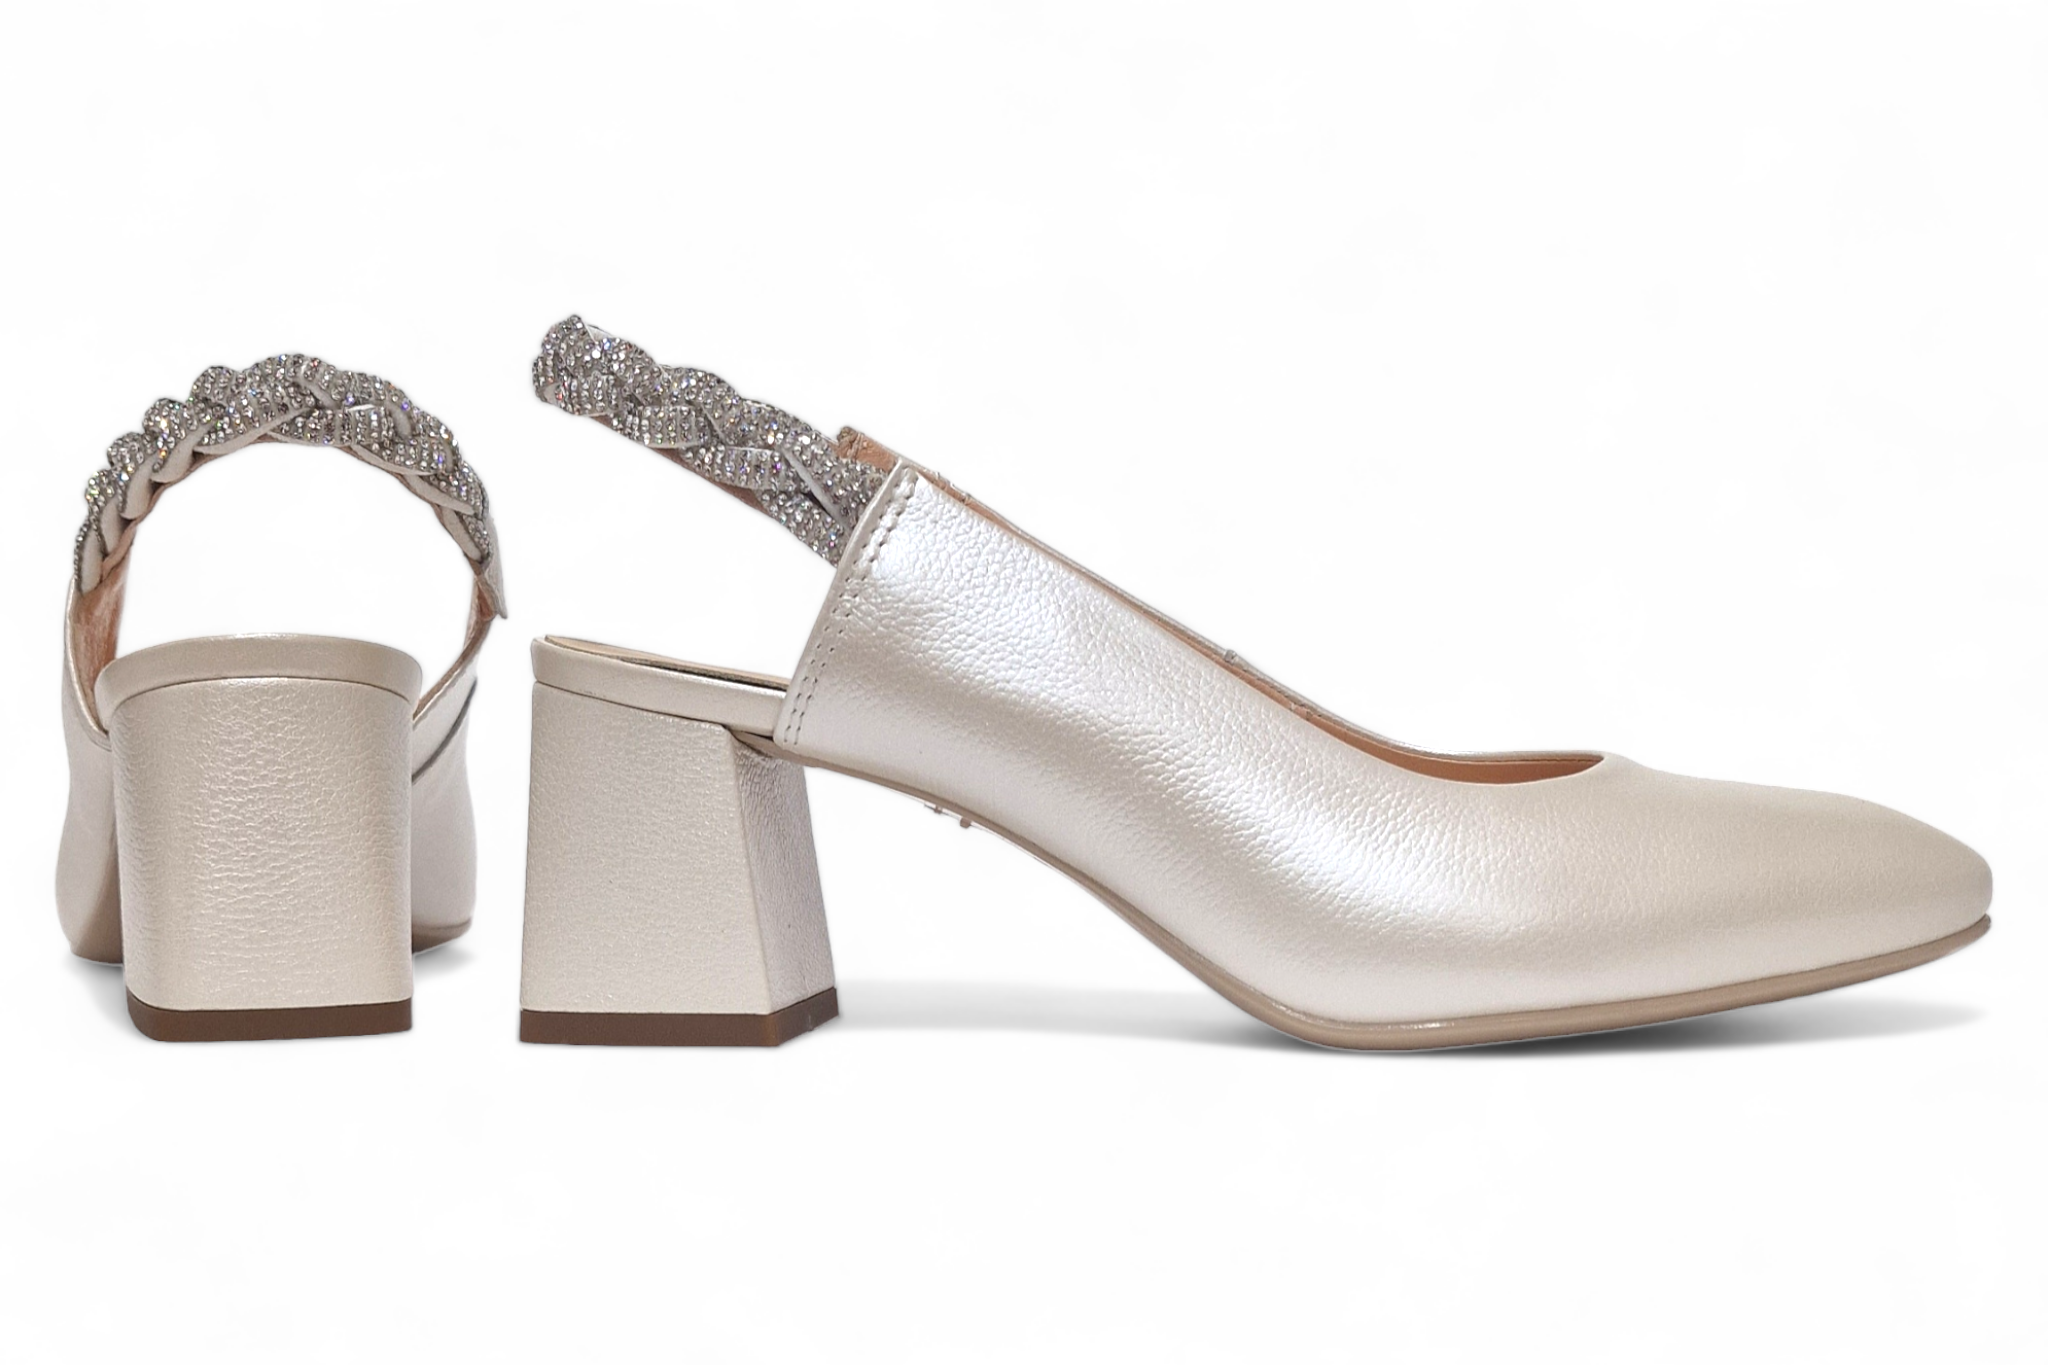 Pantofi dama eleganti piele naturala SALA dec 9977 ivory